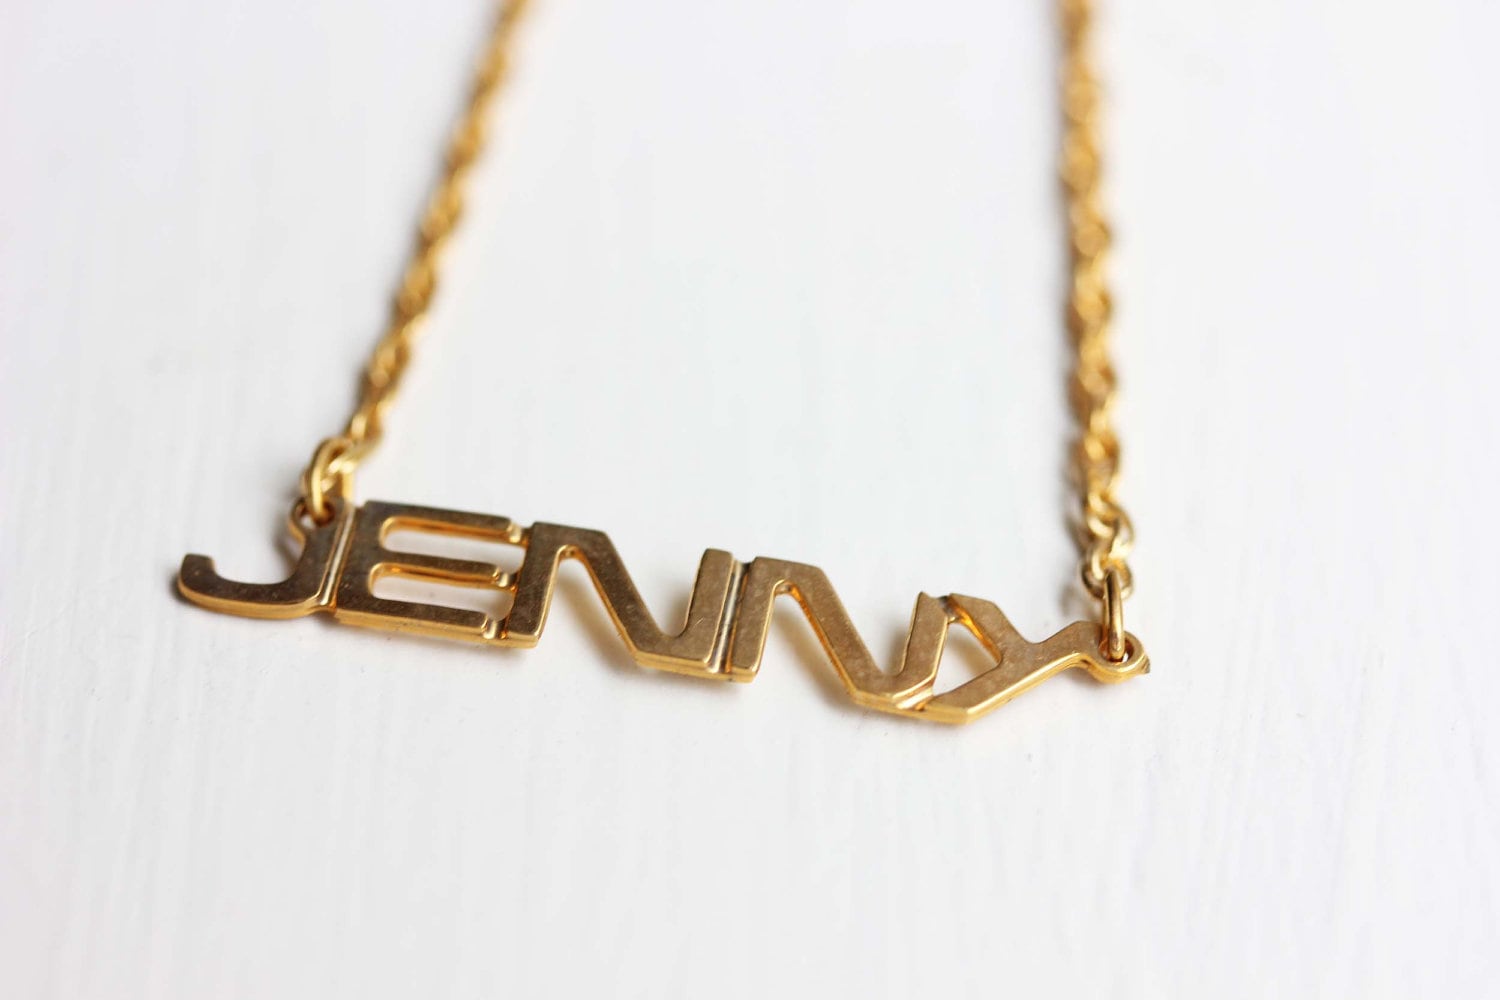 Jenny Name Halskette, Schmuck, Namenskette Gold, Gold Retro Namenskette, Vintage von diamentdesigns